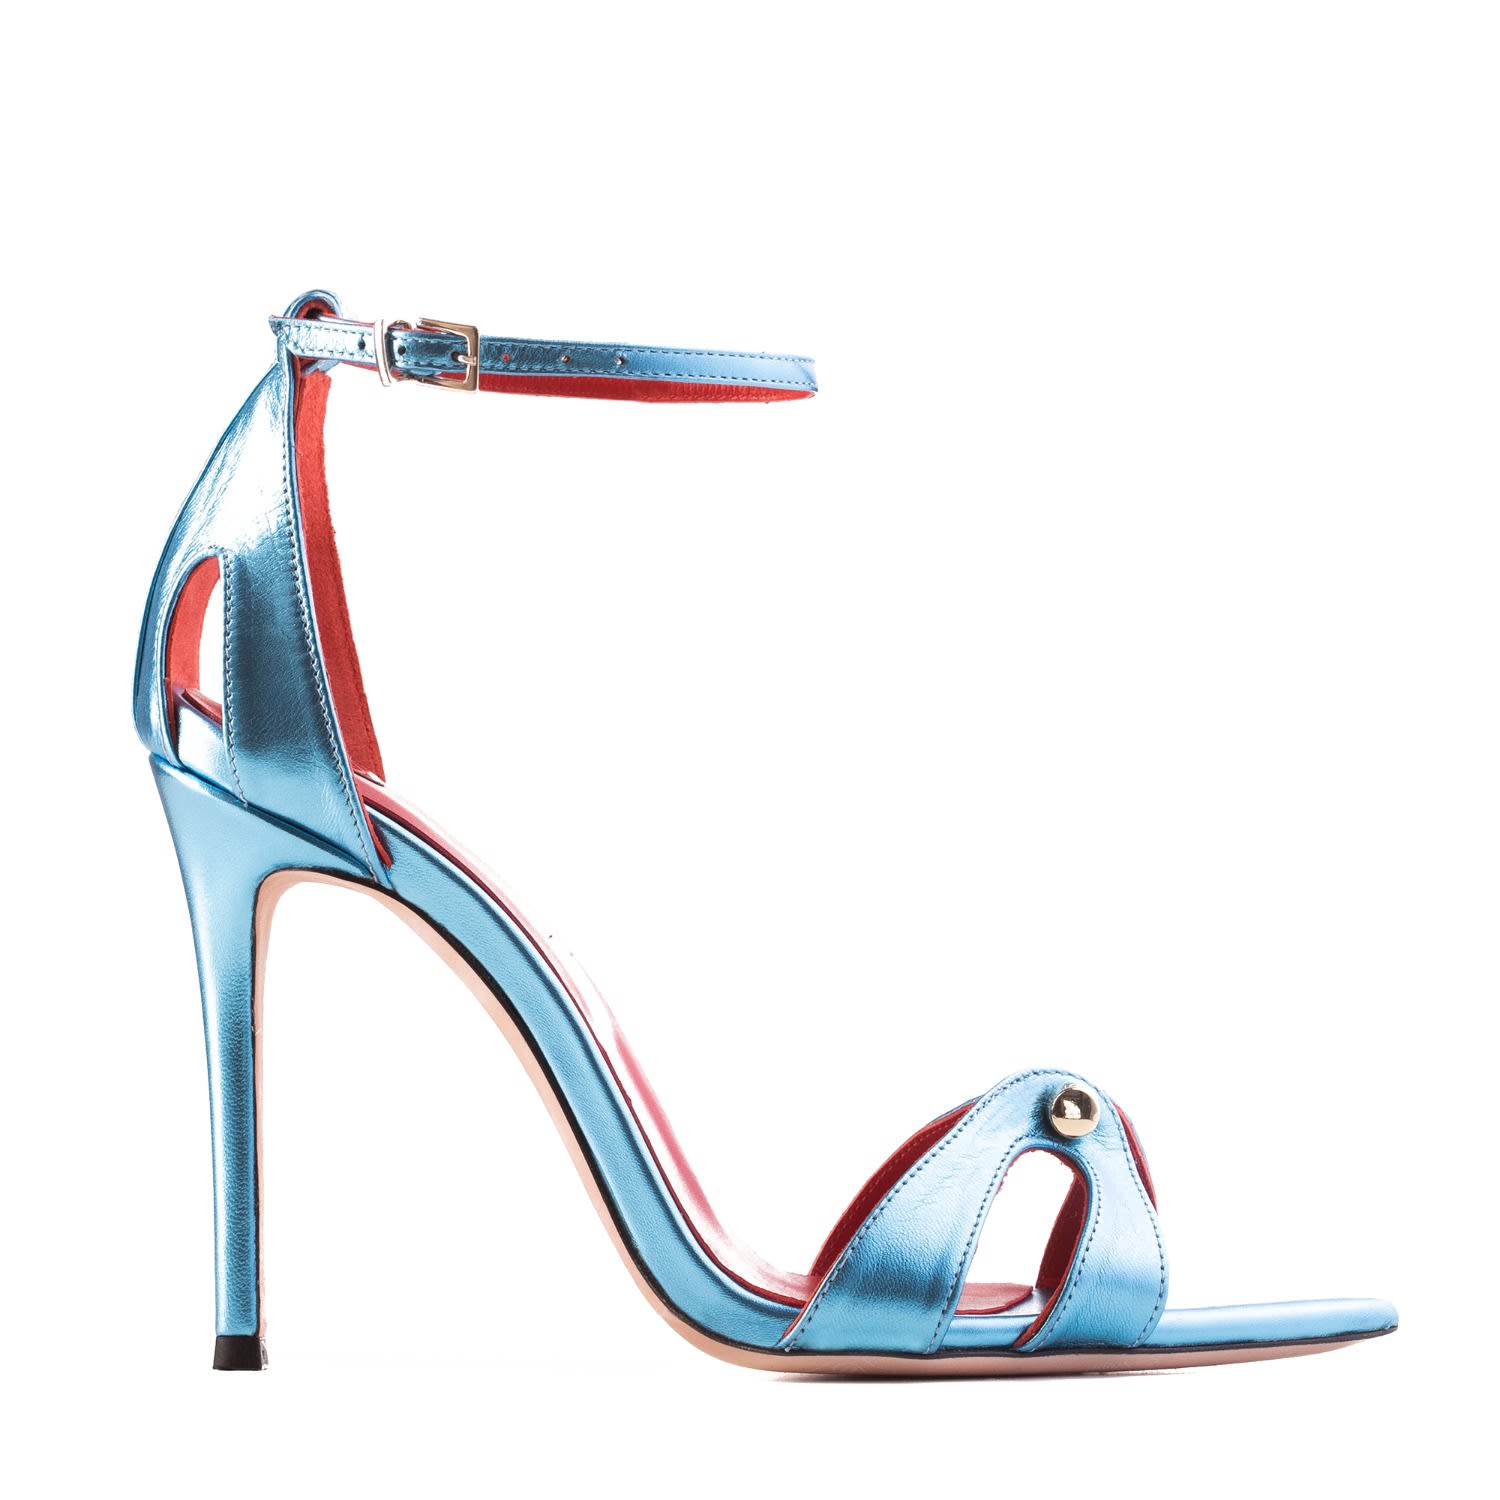 Shop Hardot Women's Blood Blue Sandals